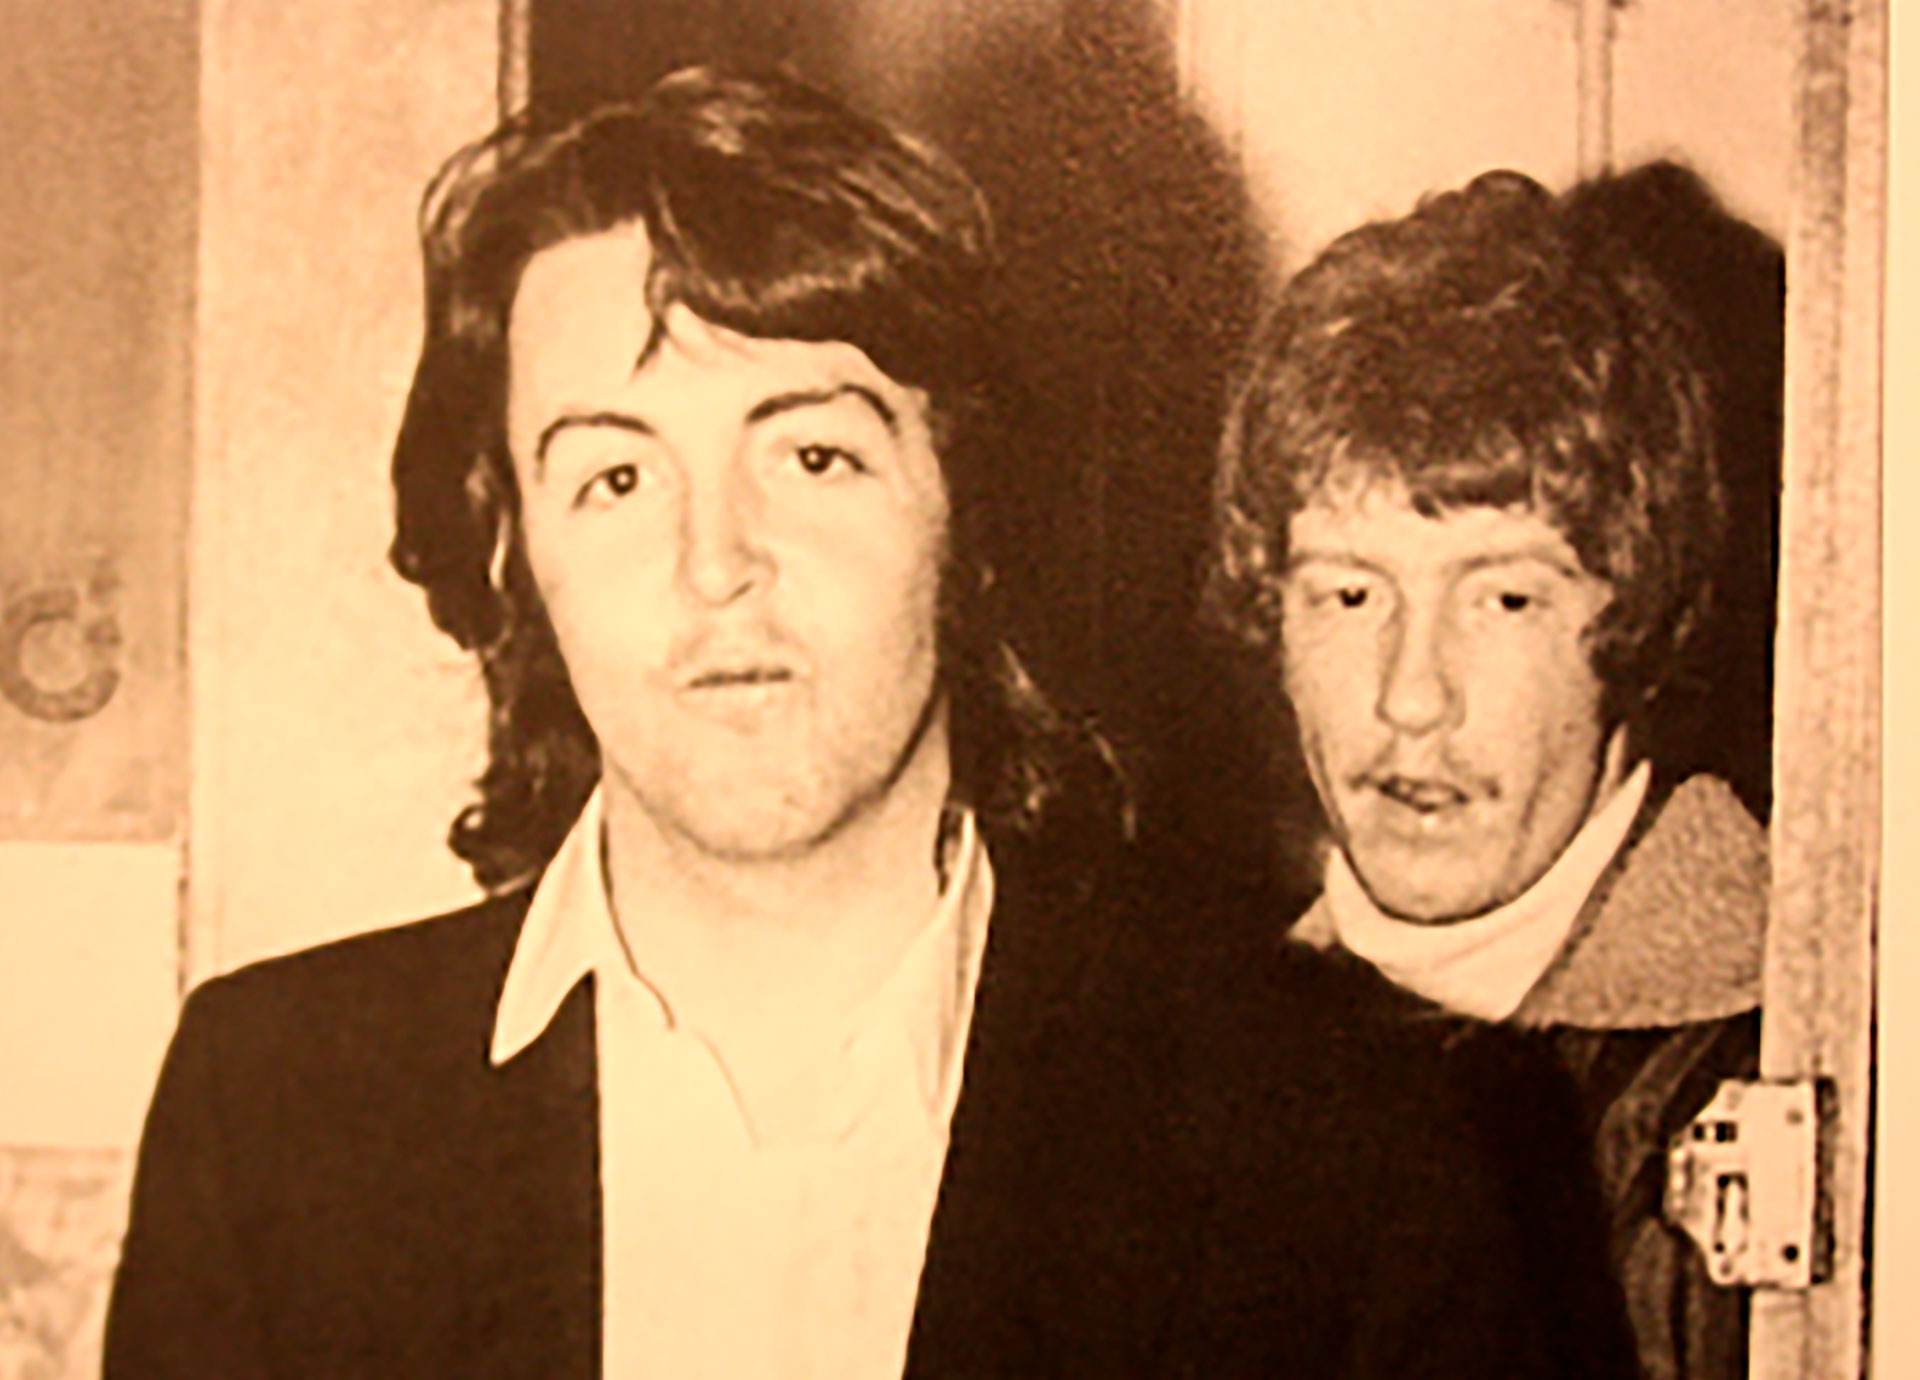 Harrington escolta a Paul McCartney a la salida del estudio (Foto extraída del libro "Who's the redhead on the roof")